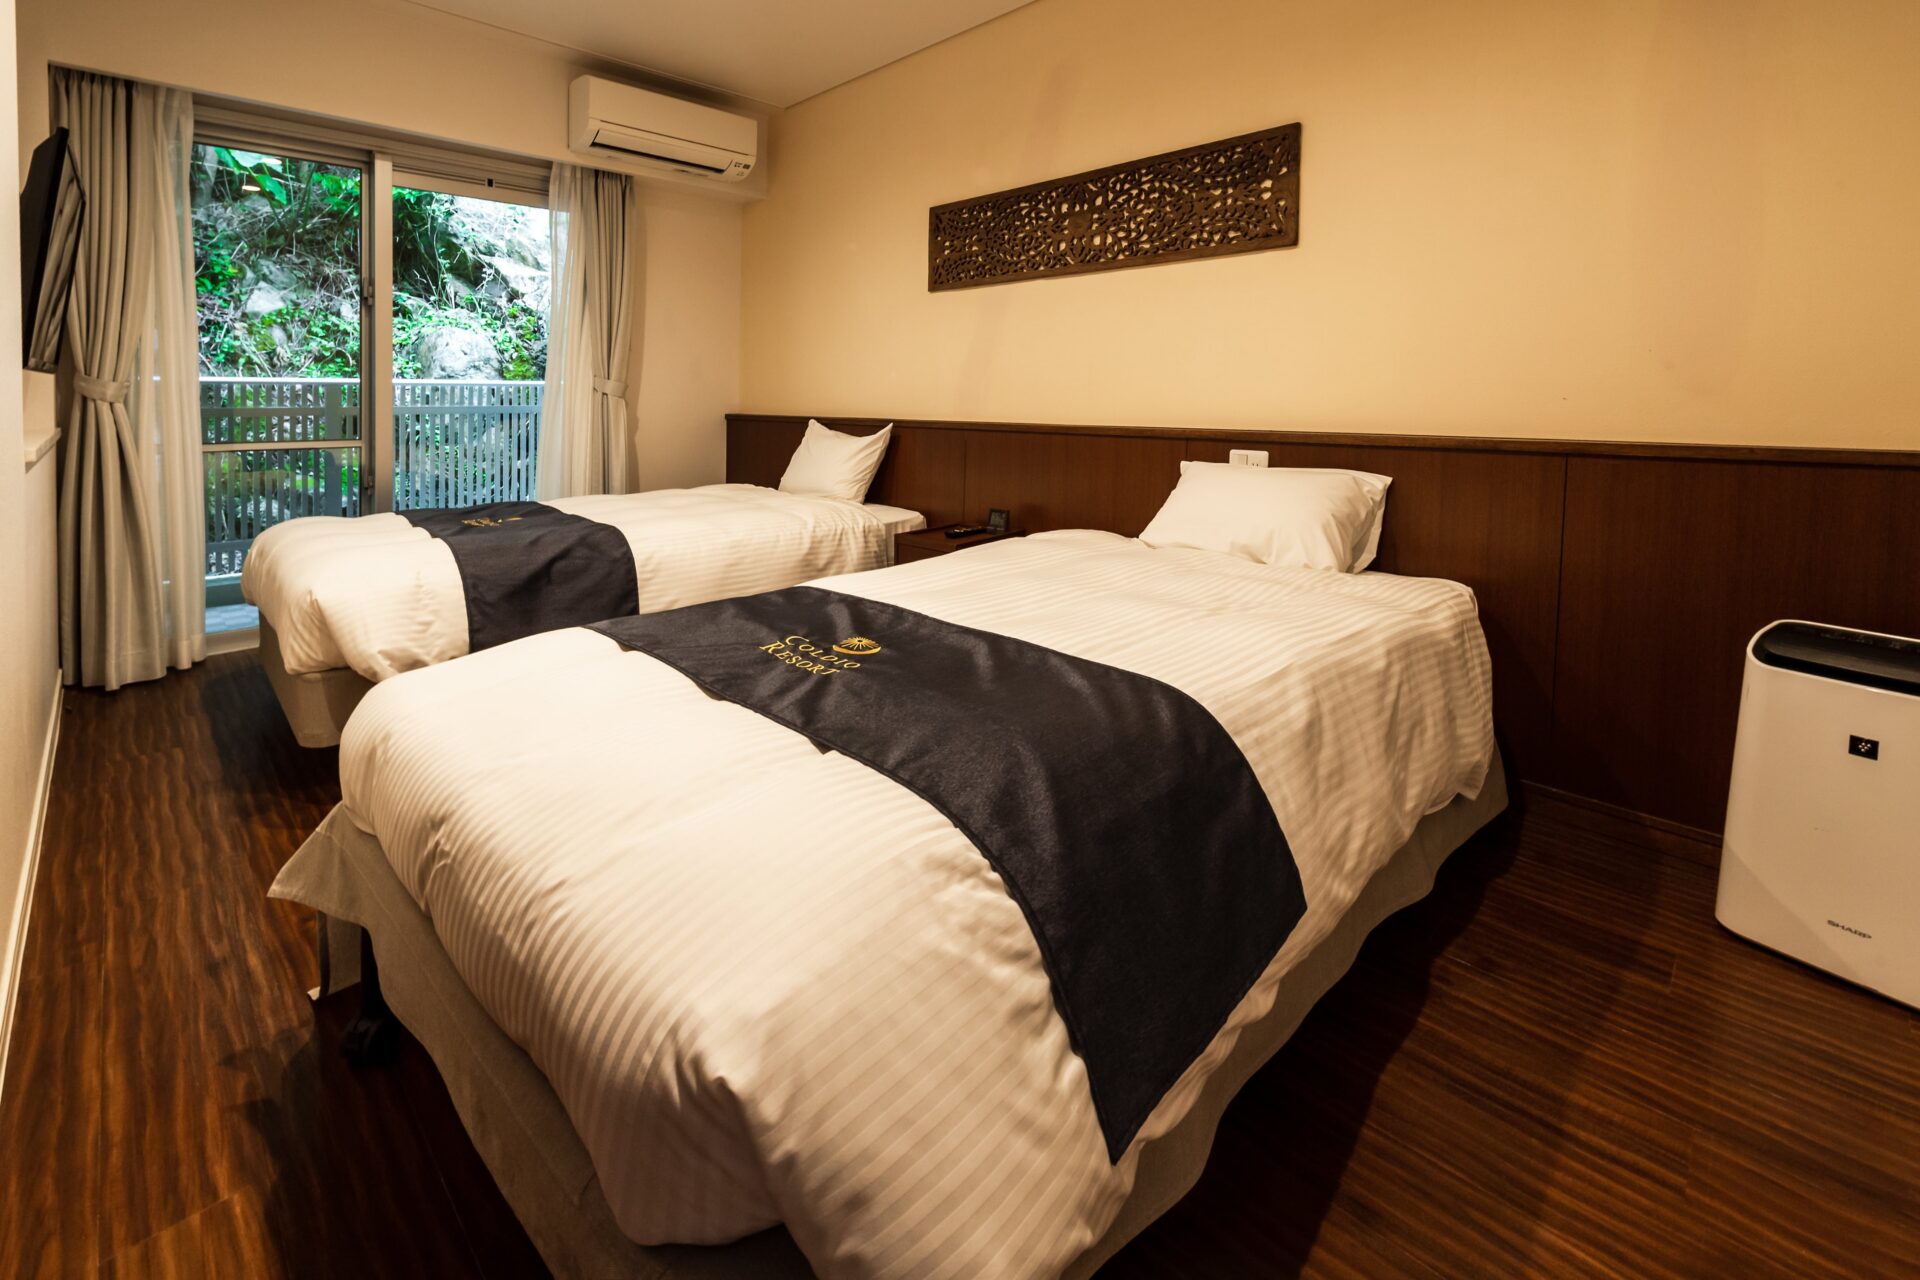 Bedrooms in hotel area